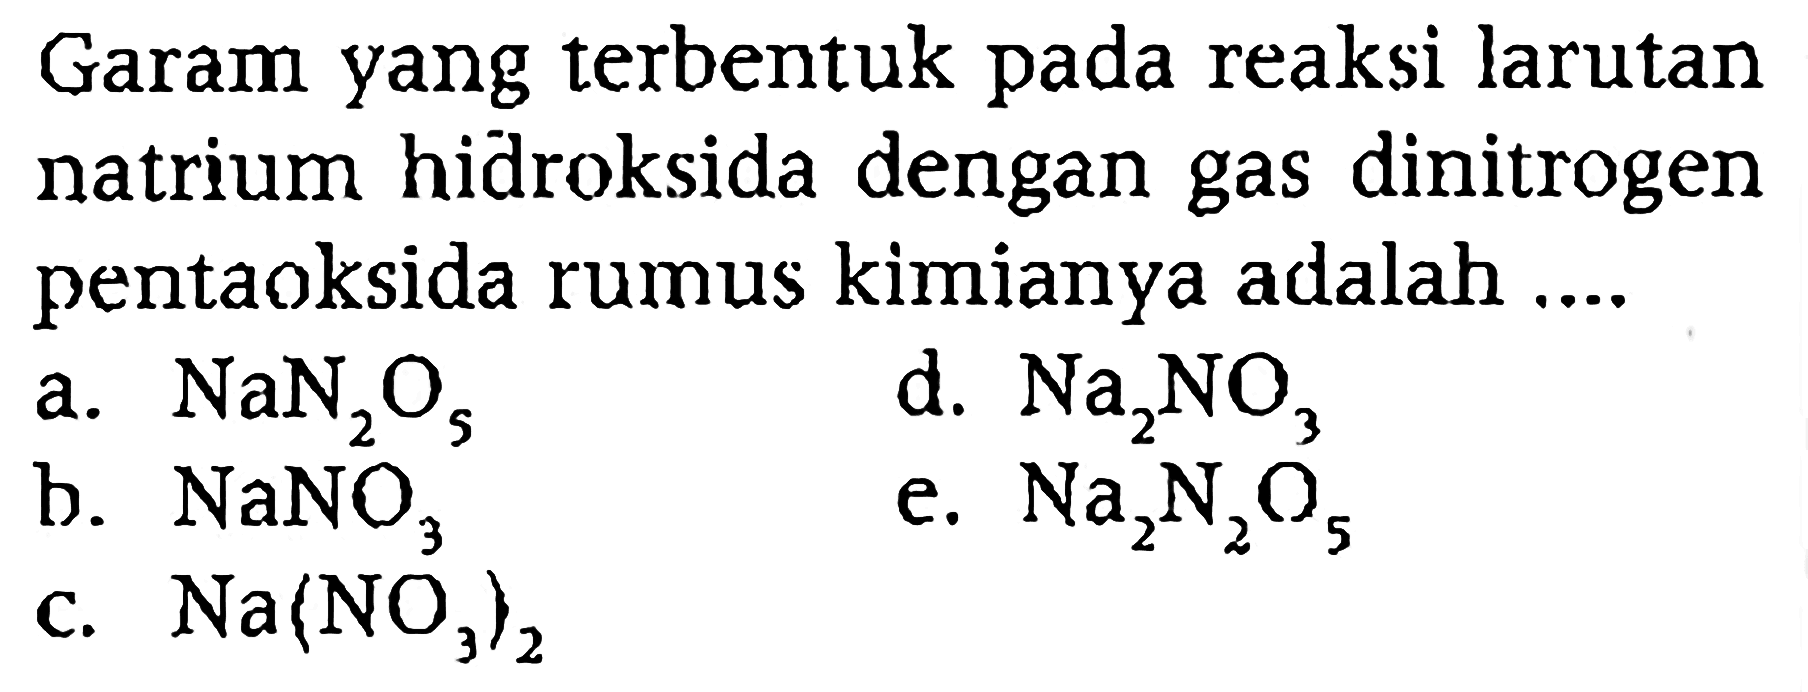 Garam yang terbentuk pada reaksi larutan natrium hidroksida dengan gas dinitrogen pentaoksida rumus kimianya adalah ....
a. NaN2 O5
d. Na2 NO3
b. NaNO3
e. Na2 N2 O5
c. Na(NO3)2